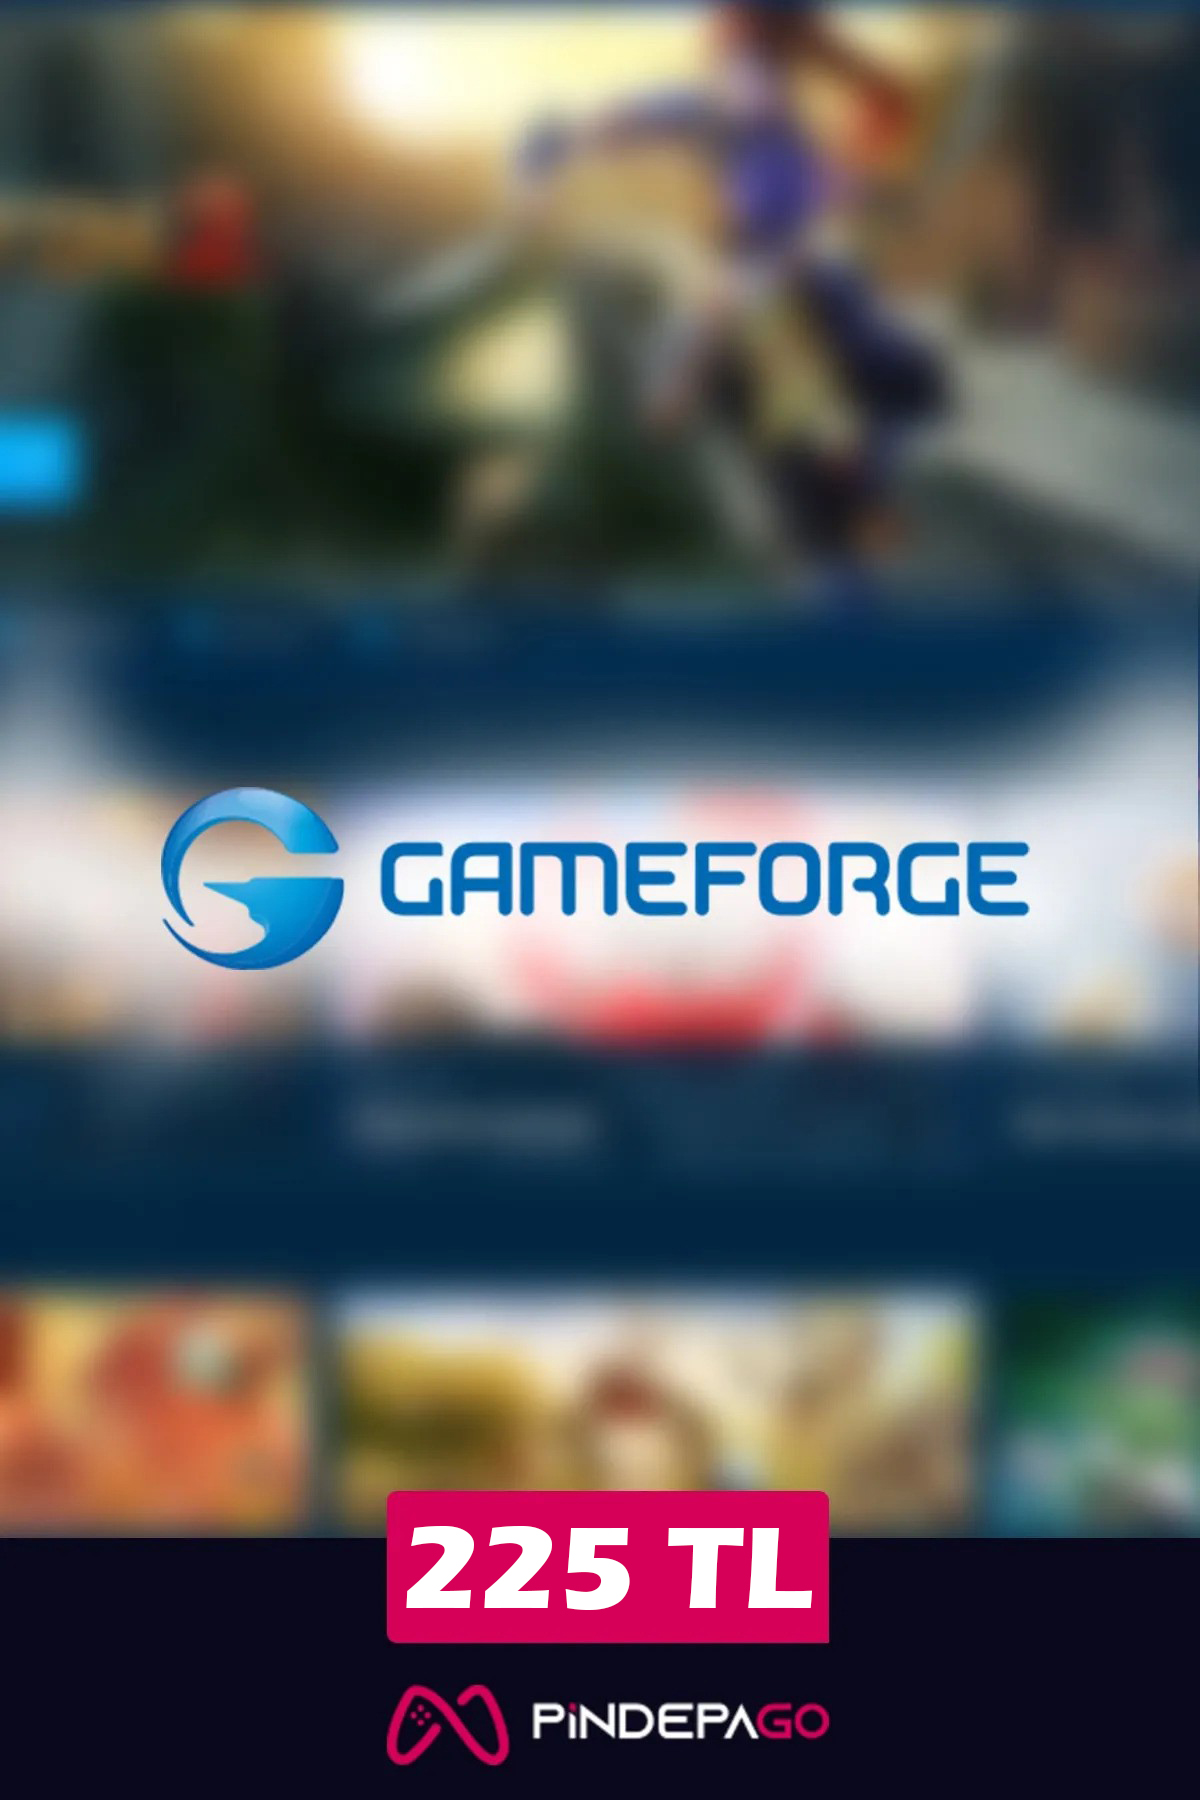 Gameforge 225 TL